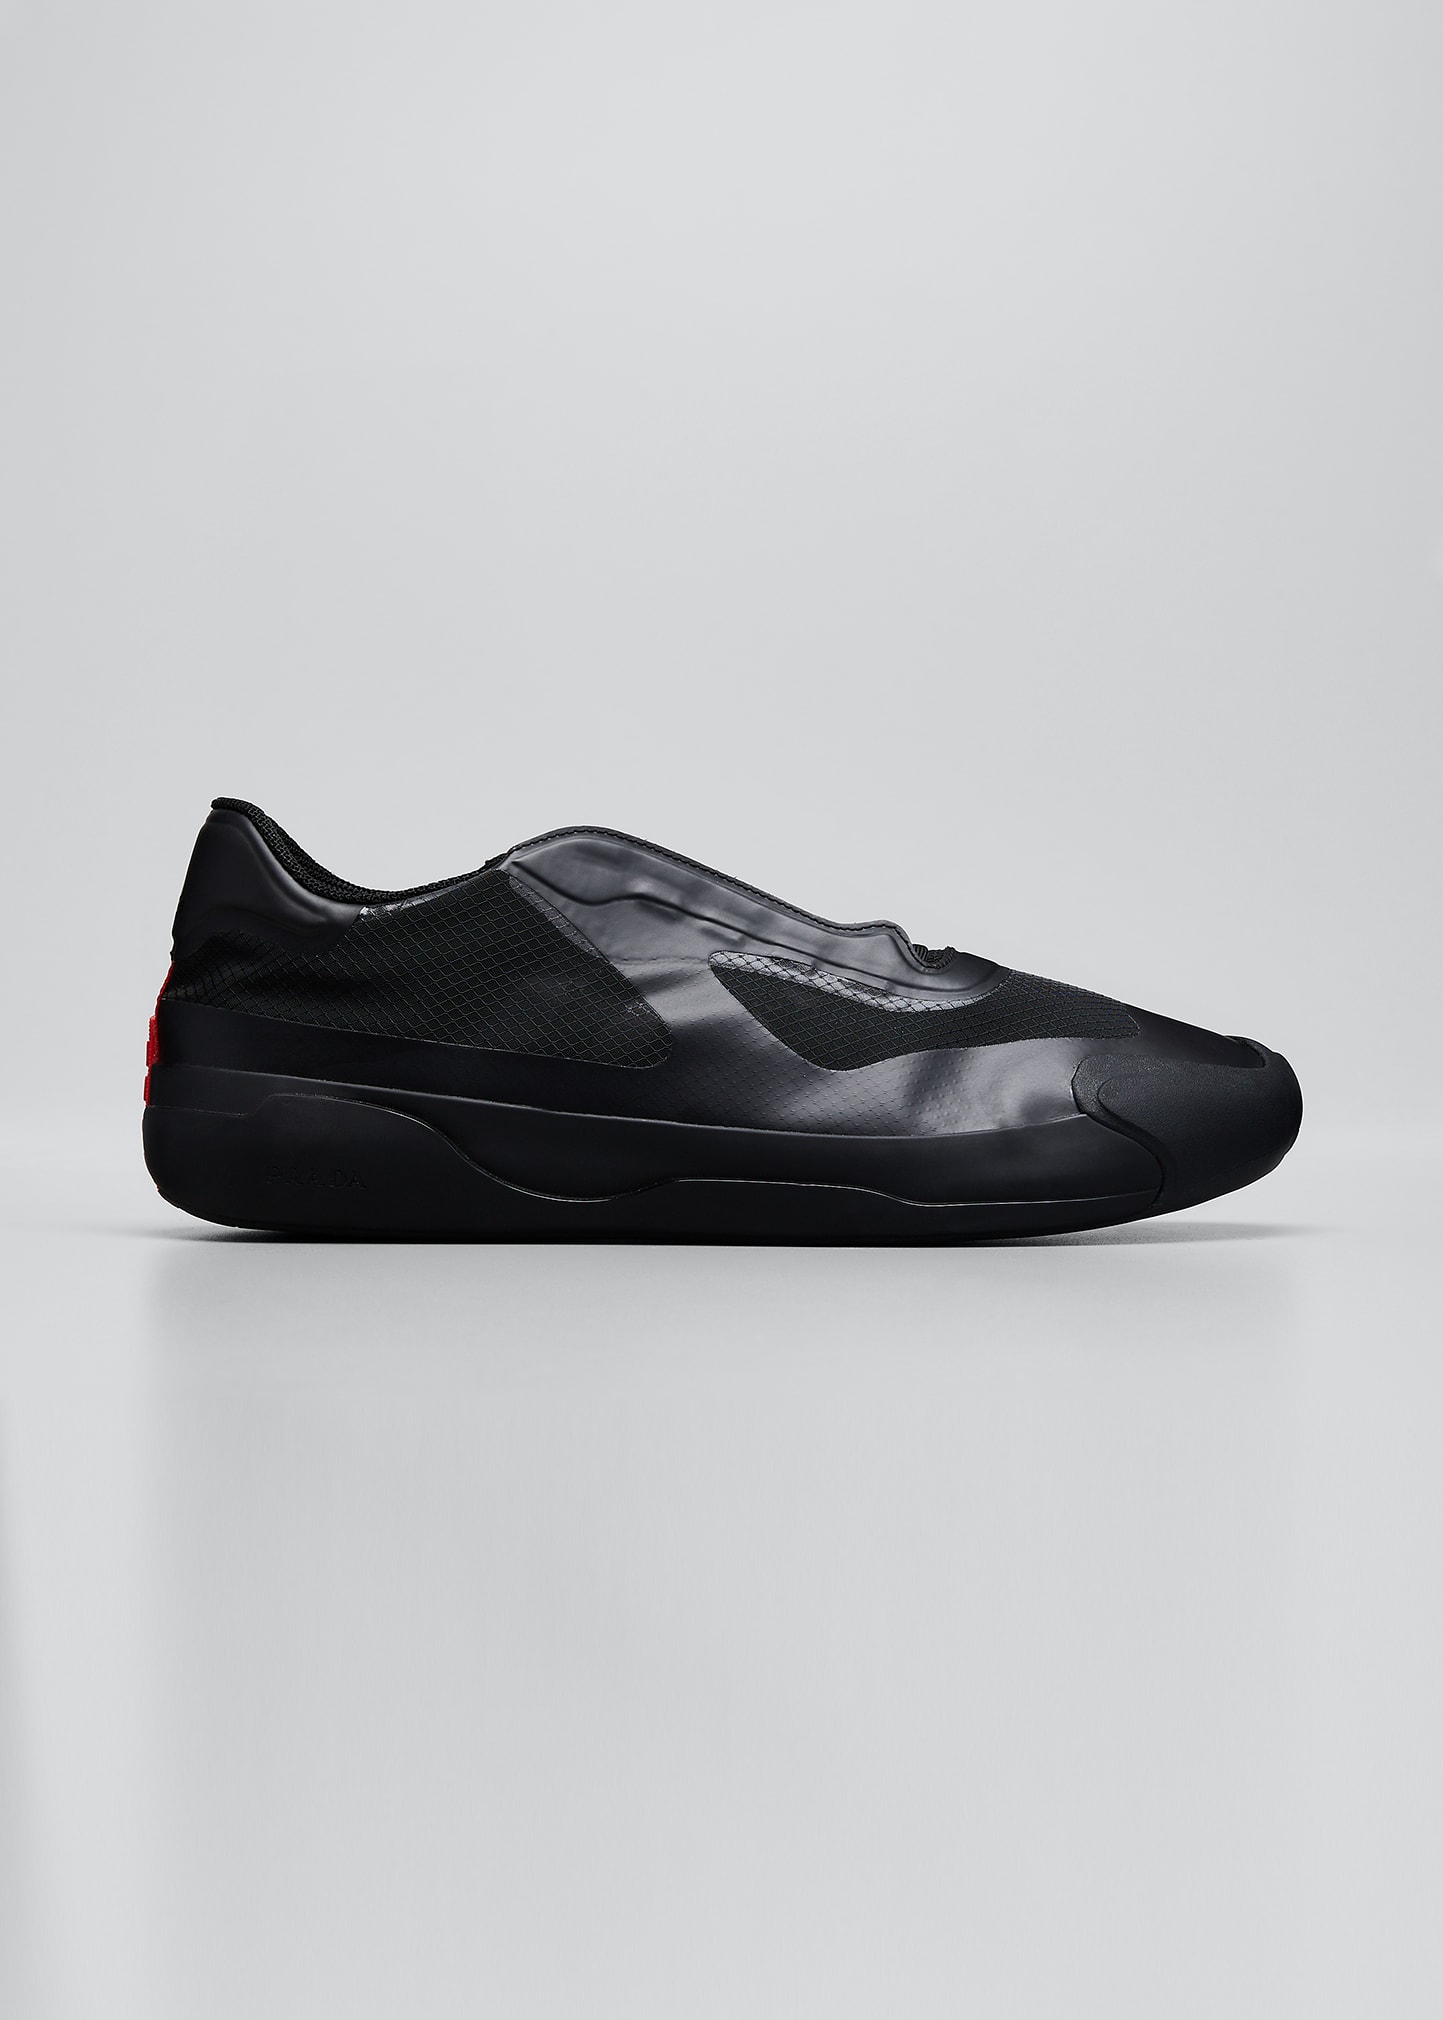 Adidas x Prada Men's Luna Rossa 21 Boat Shoes